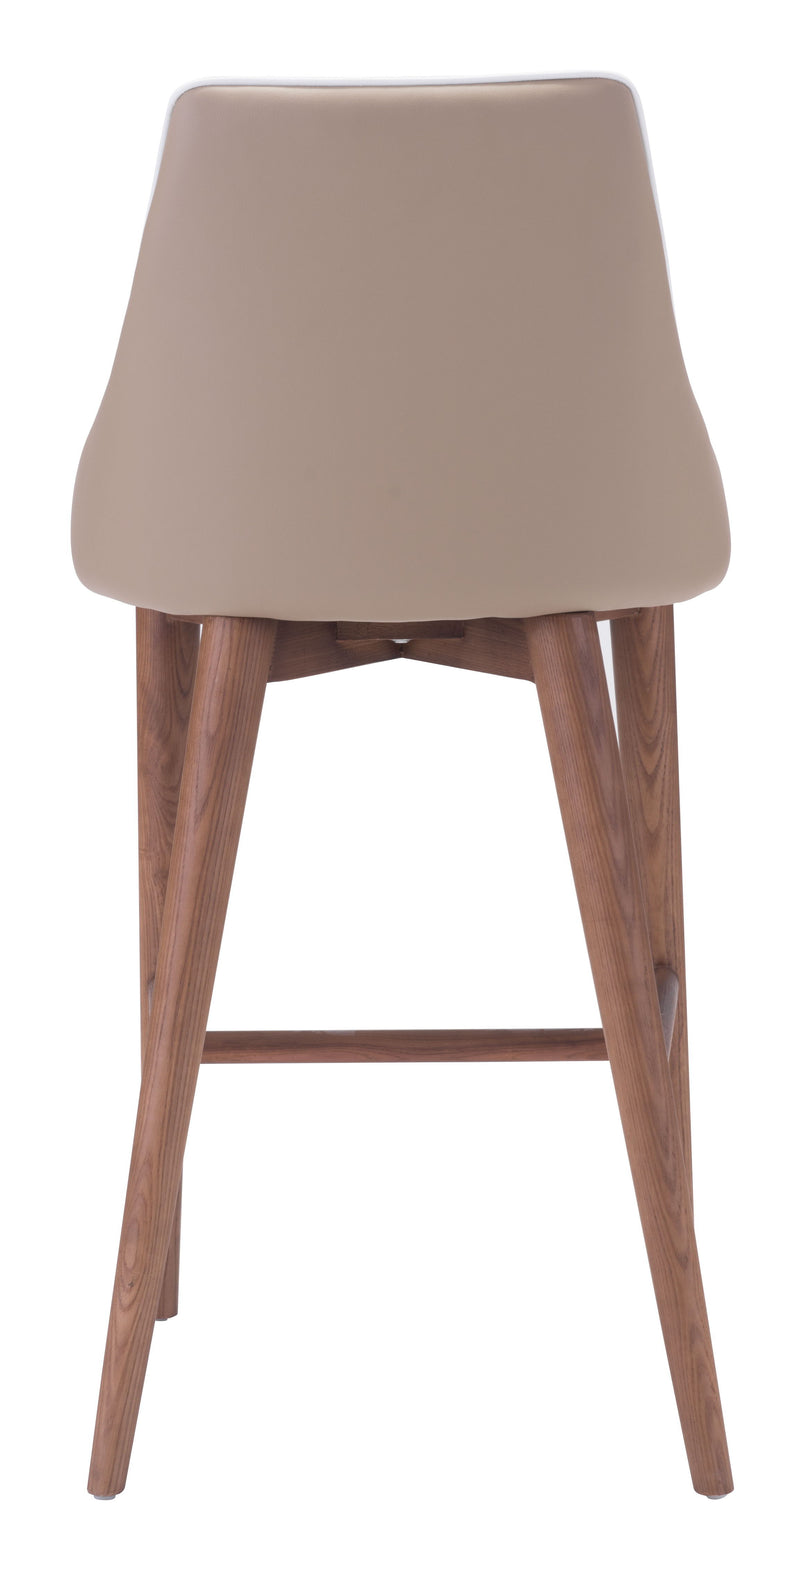 Moor - Counter Chair